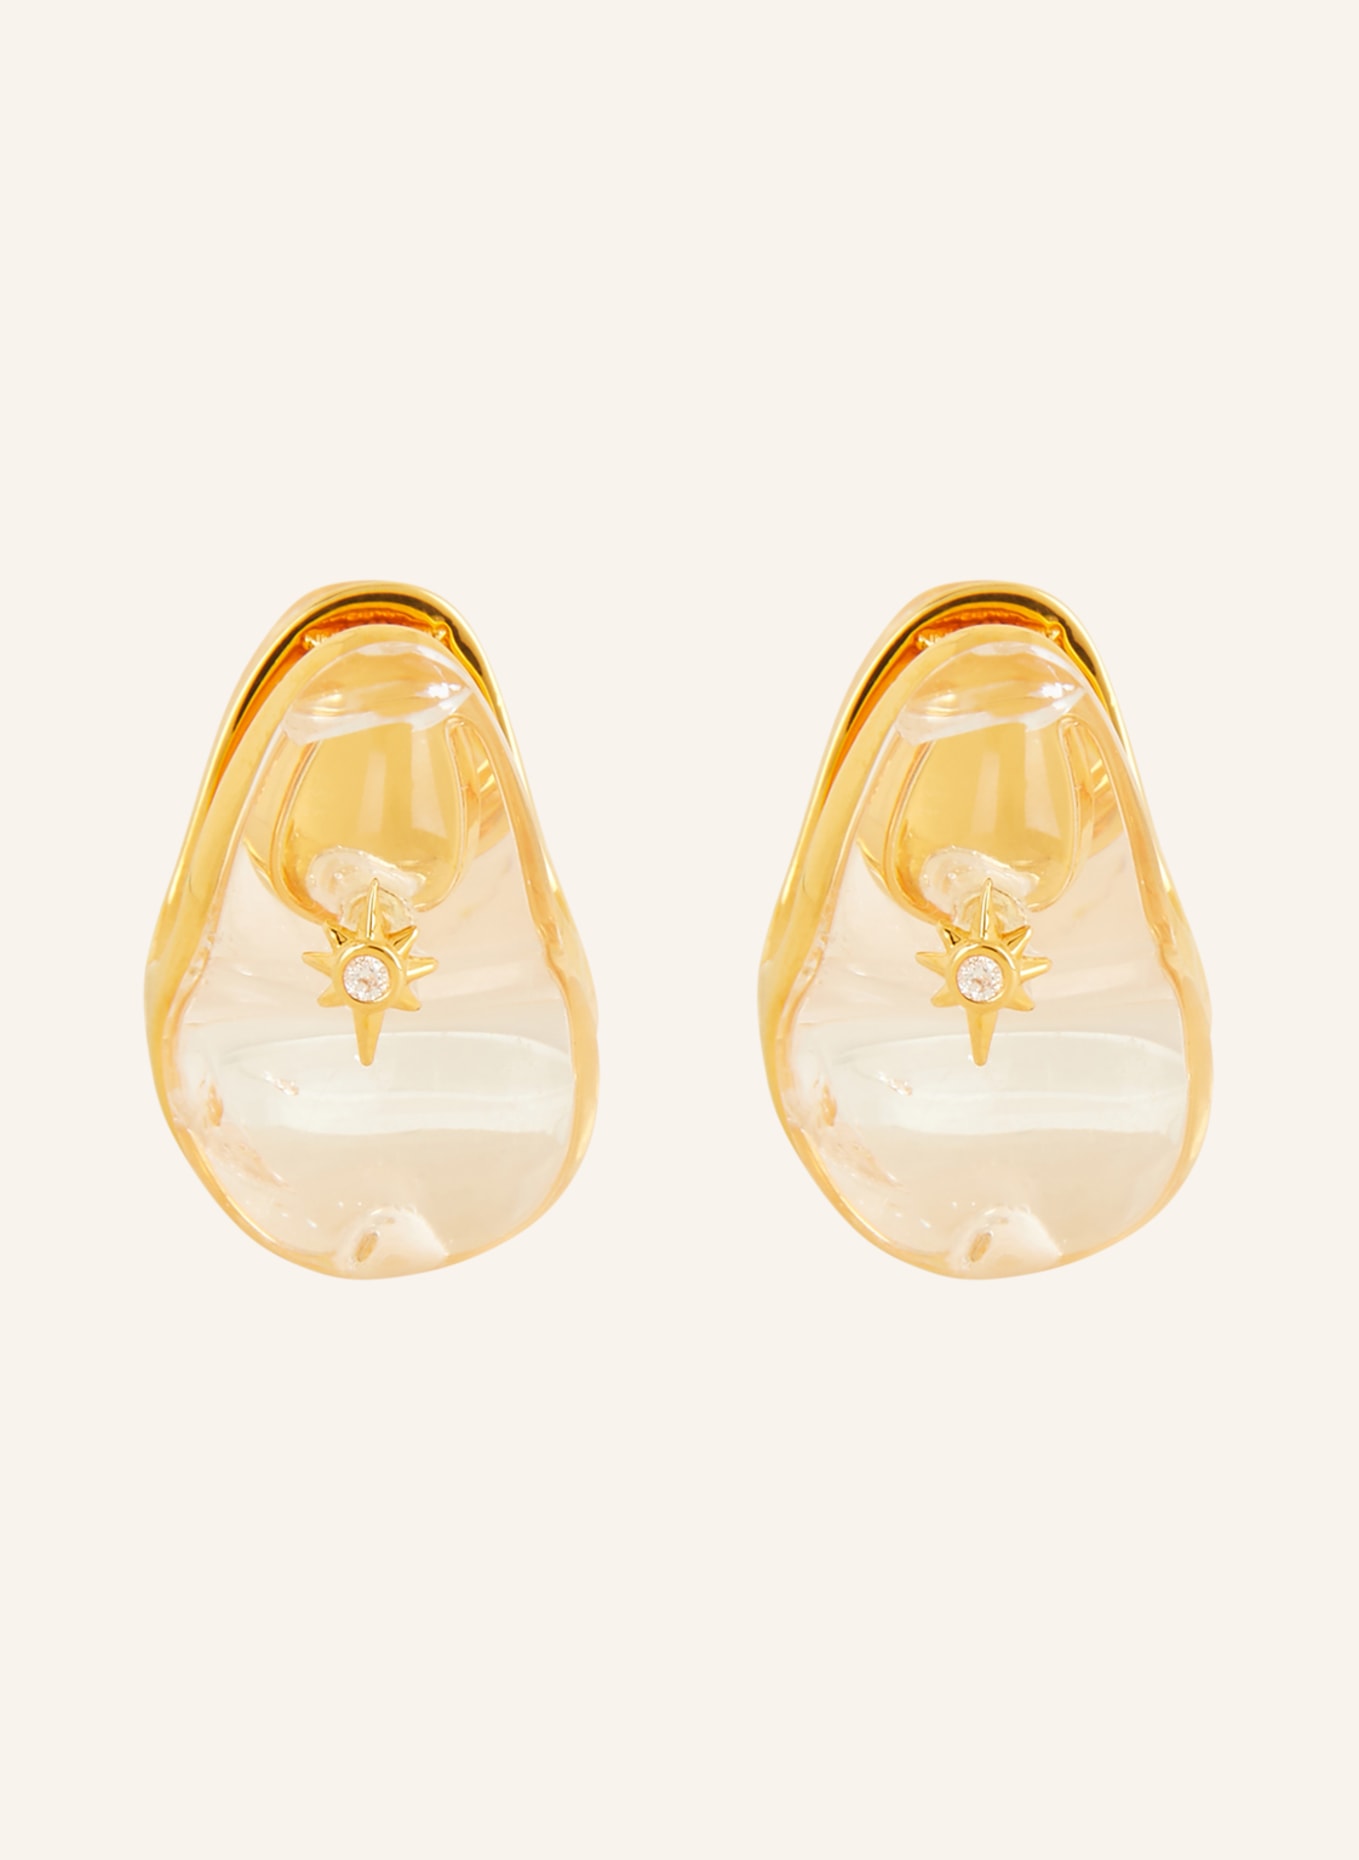 ZIMMERMANN Ohrringe CRYSTAL PEBBLE, Farbe: GOLD/ WEISS (Bild 1)